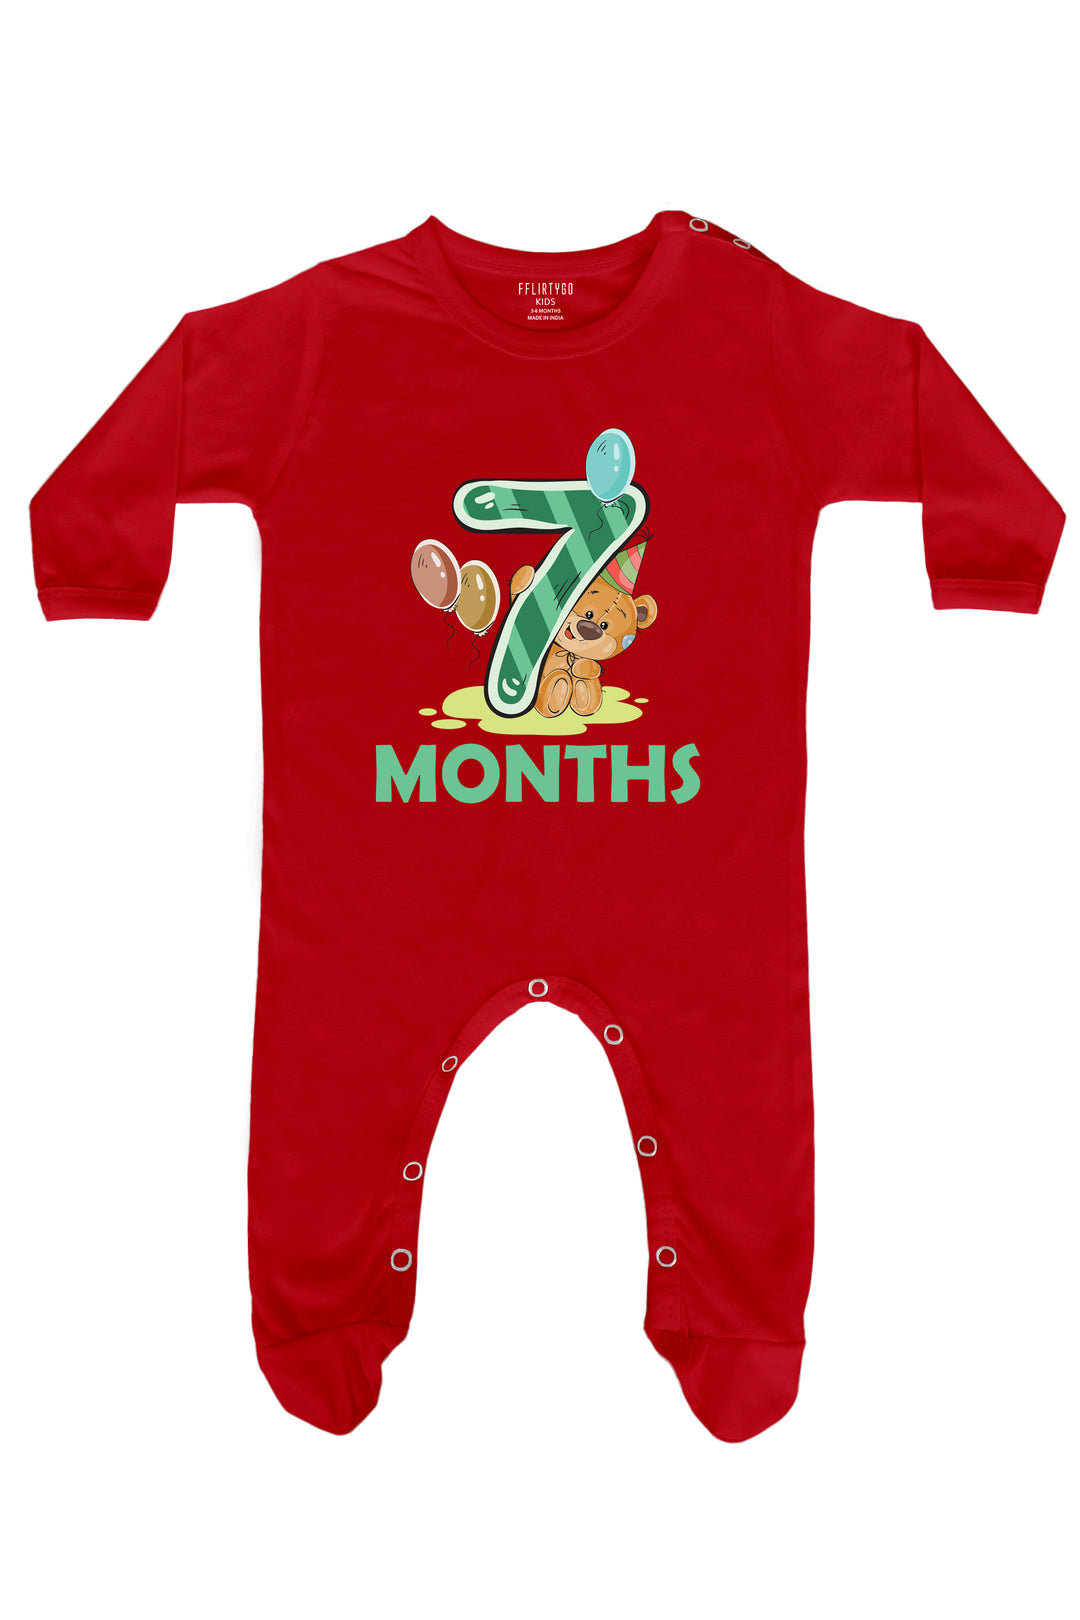 Seven Months Milestone Baby Romper | Onesies